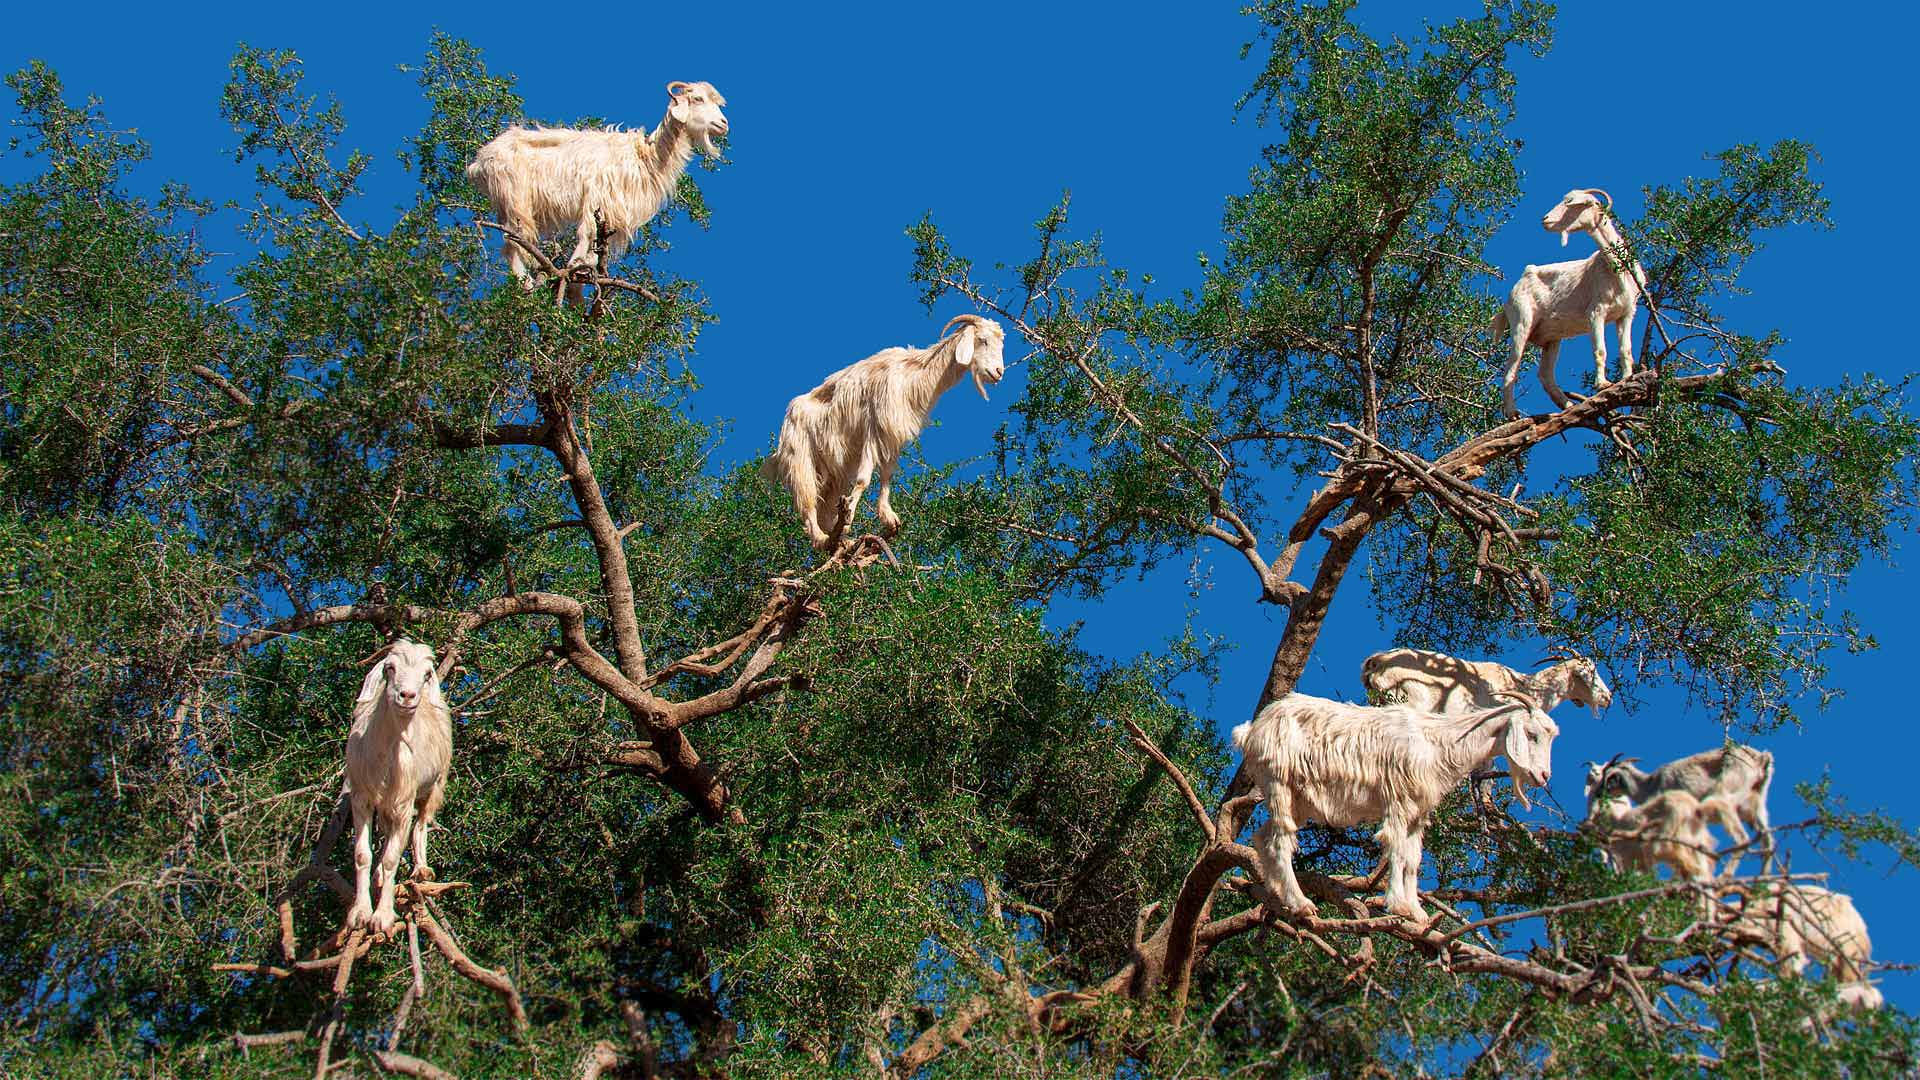 Goats in an argan tree near Essaouira, Morocco - Nizz/Shutterstock)